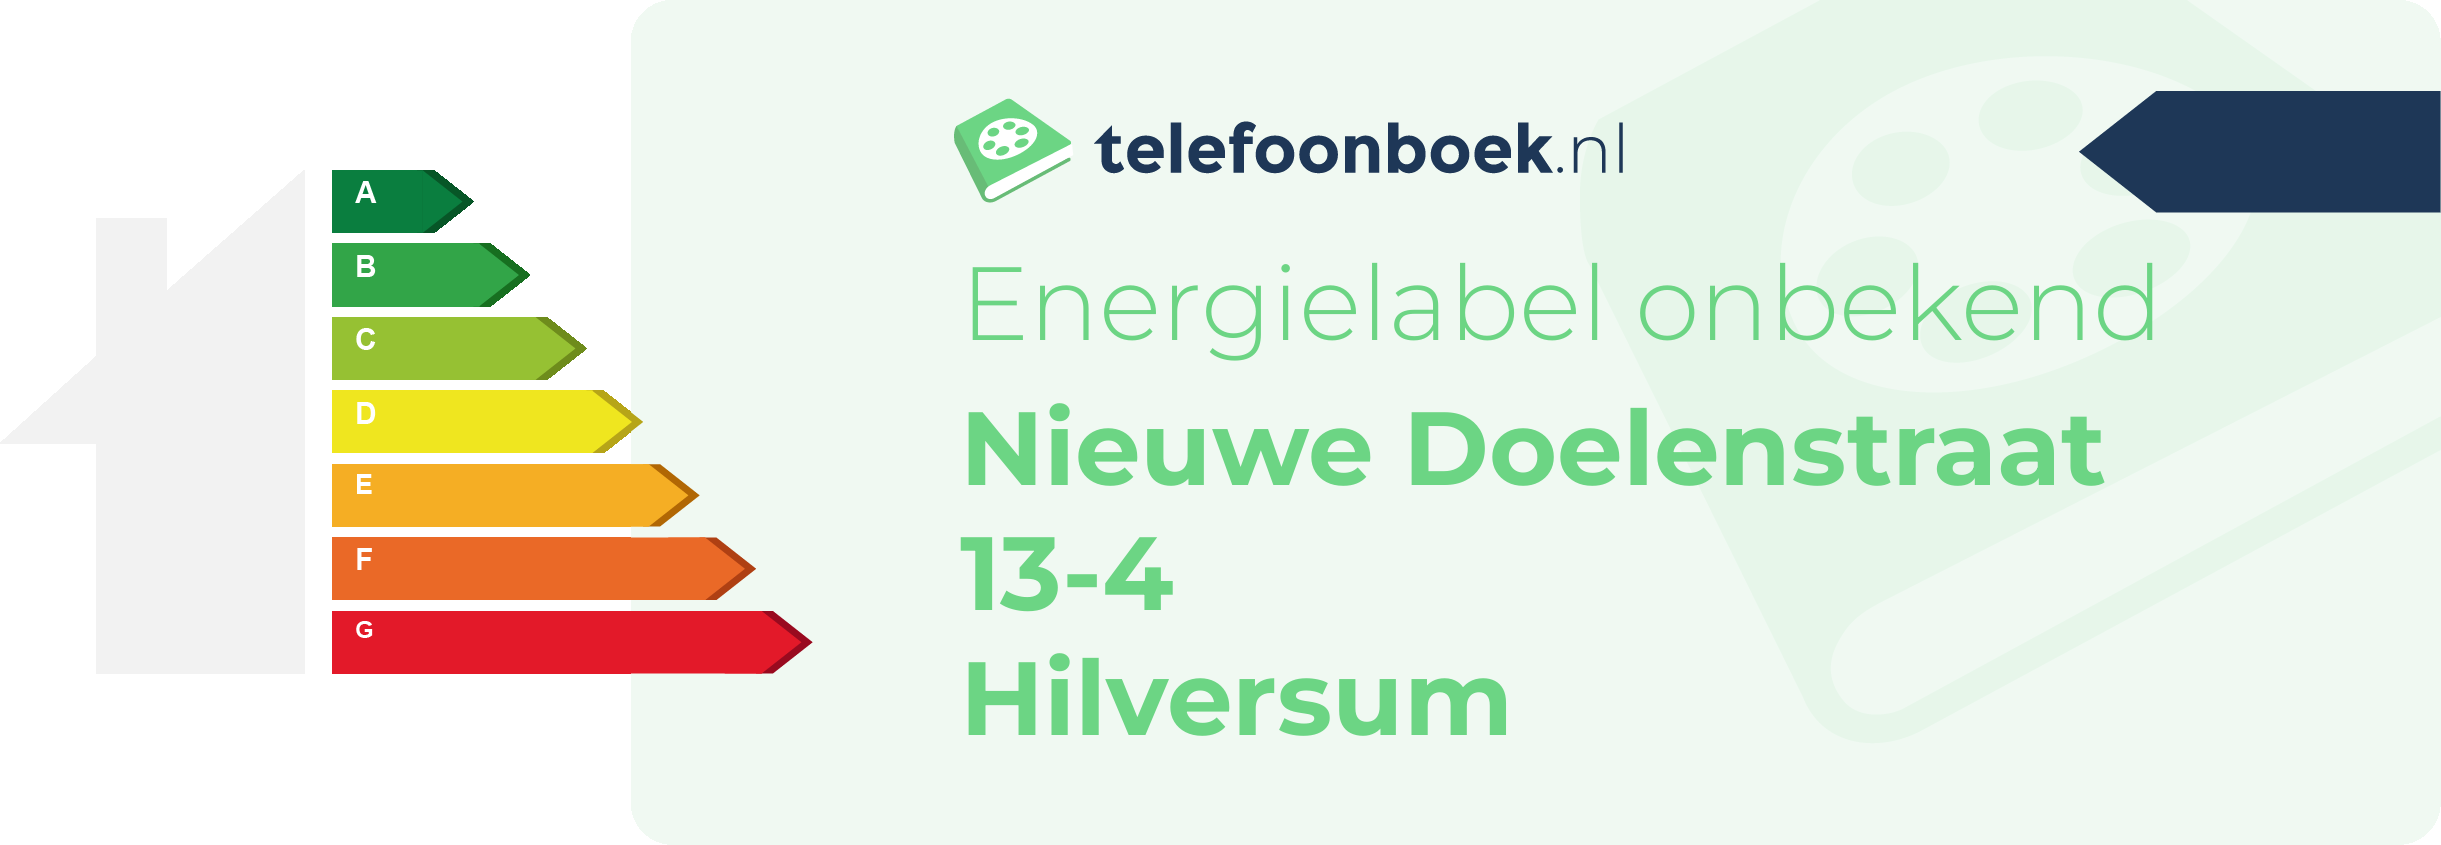 Energielabel Nieuwe Doelenstraat 13-4 Hilversum